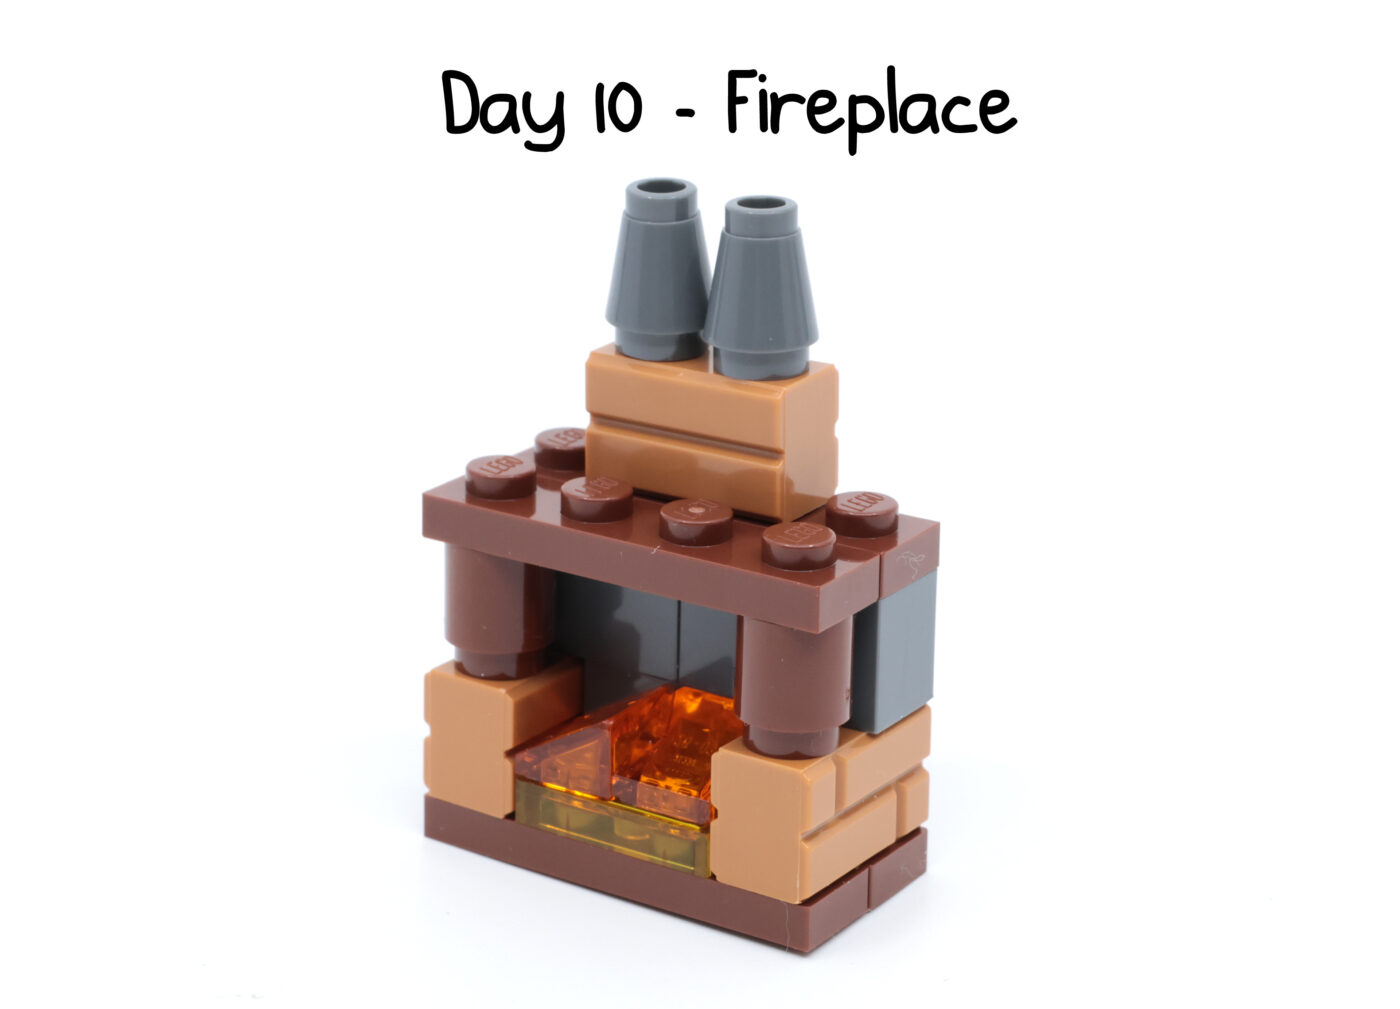 LEGO City Advent Calendar 2023 Daily Countdown - Jay's Brick Blog